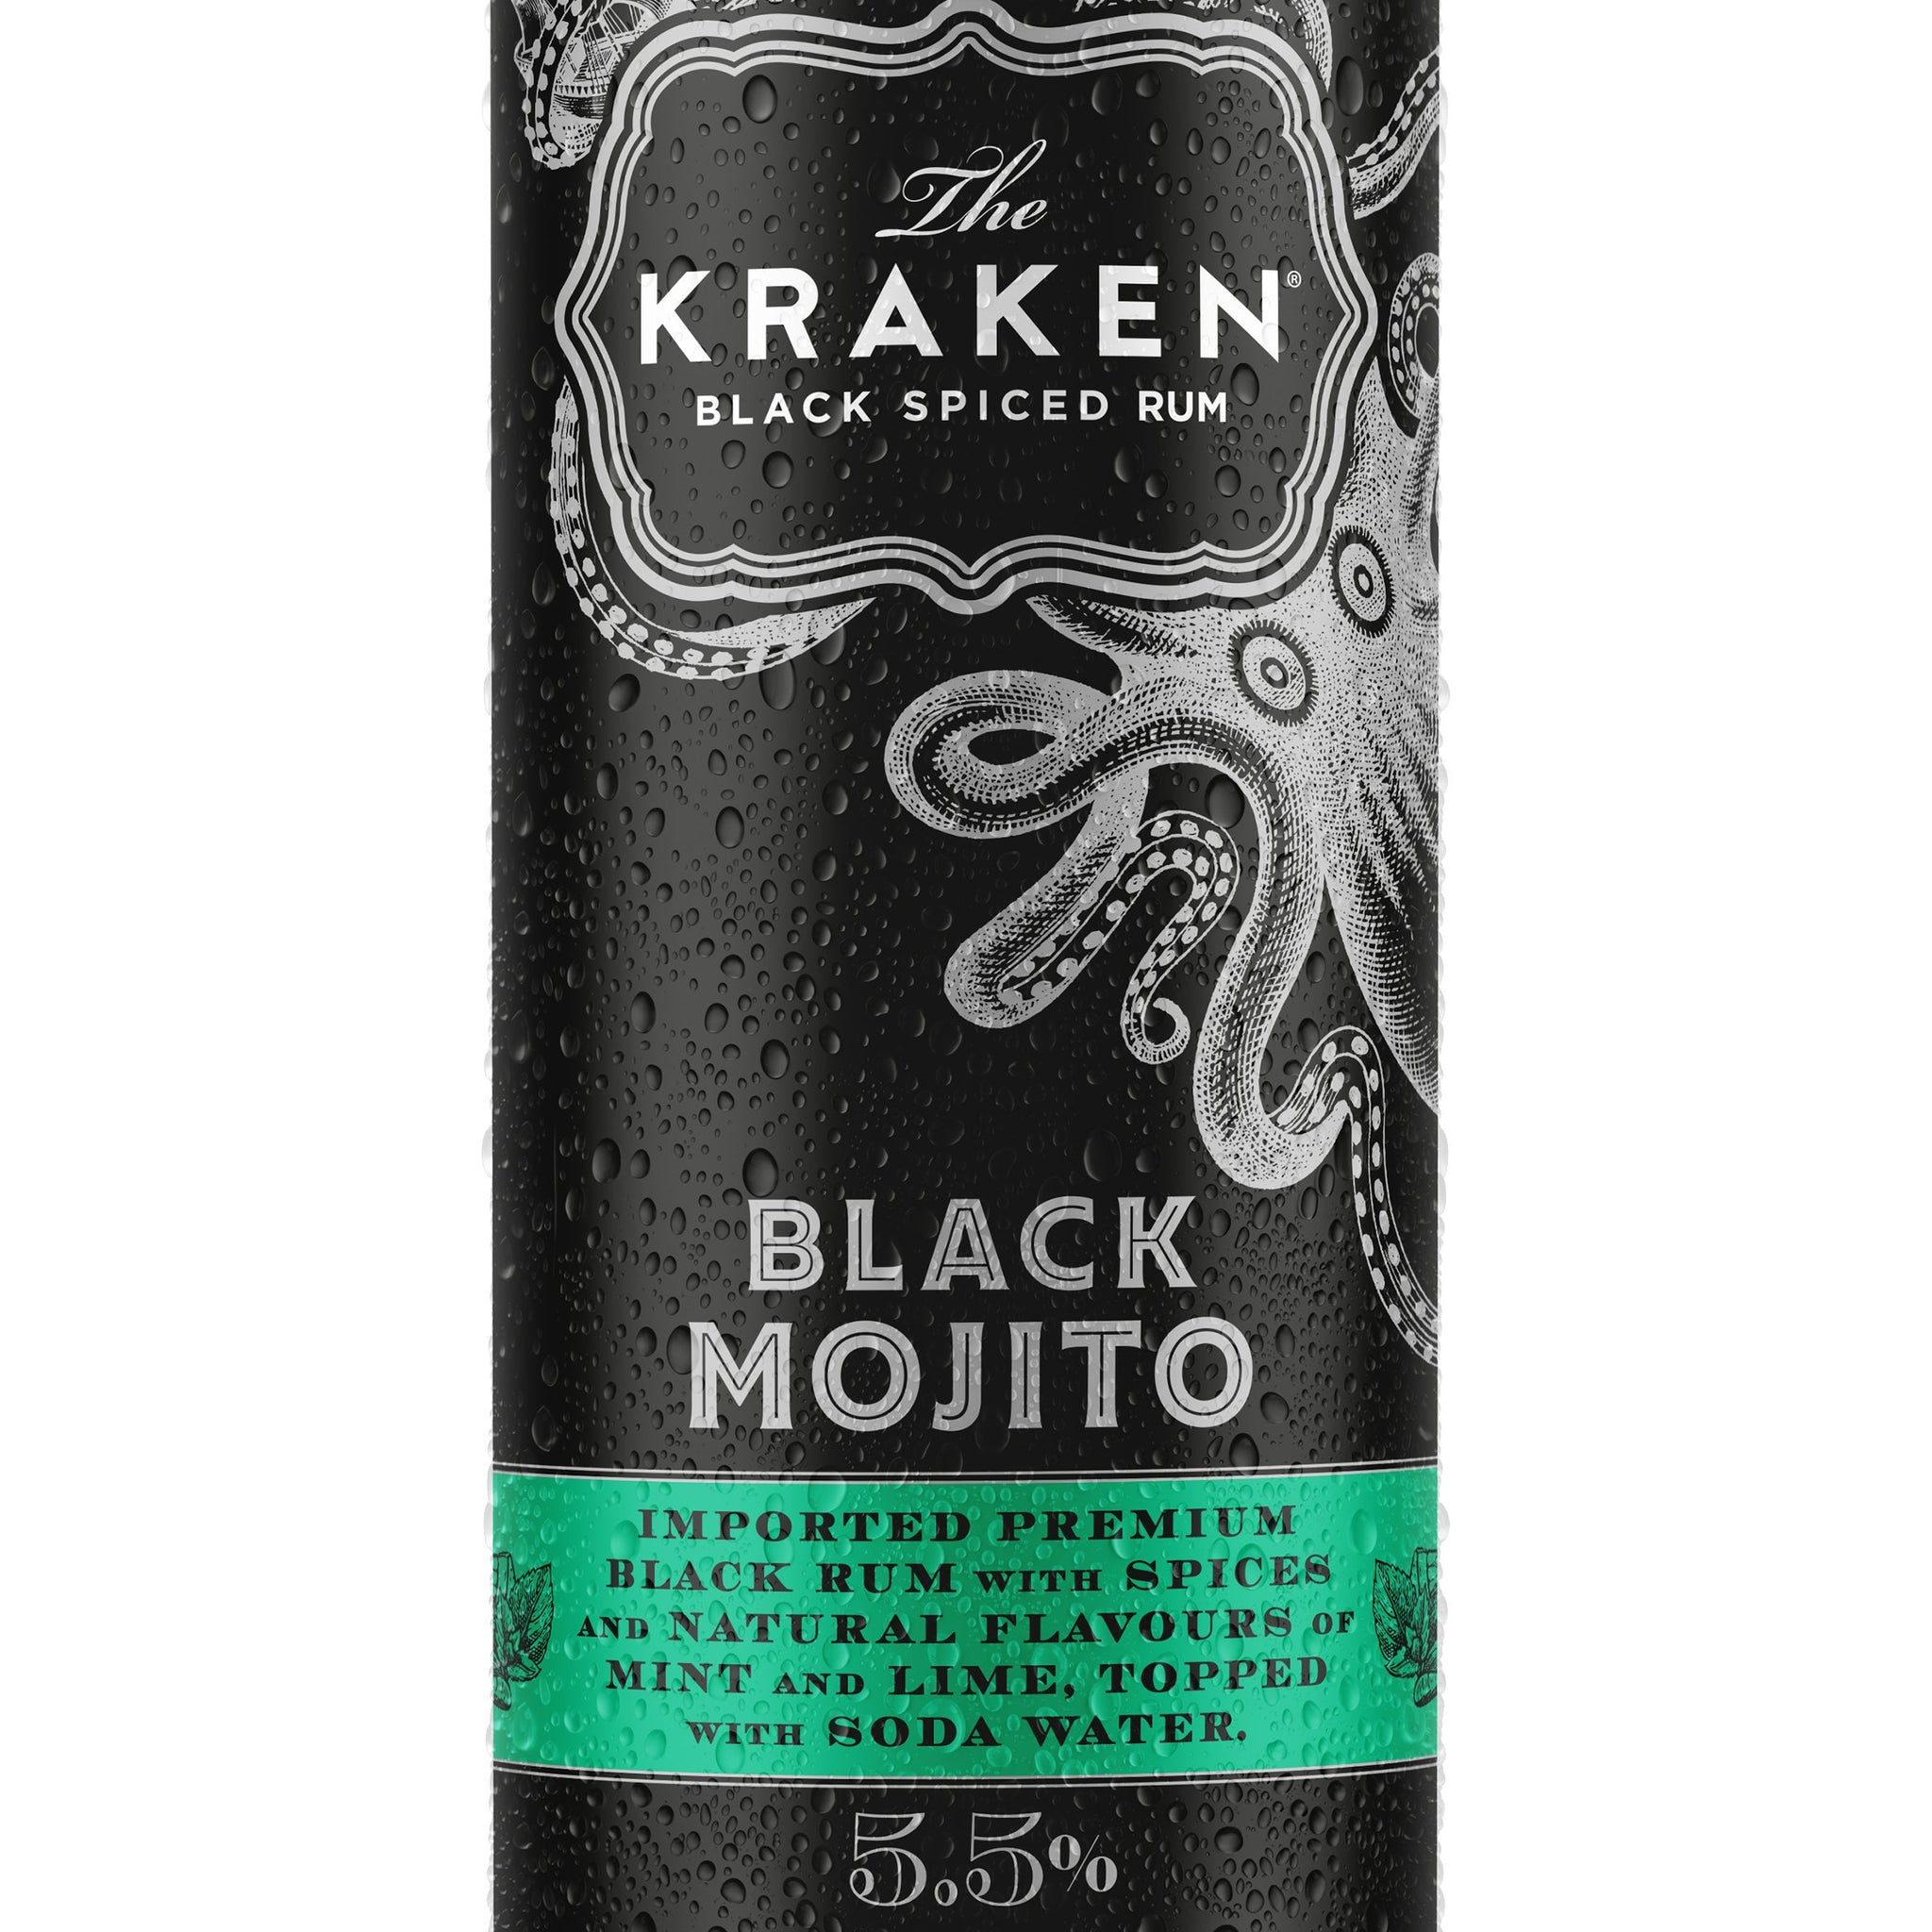 Kraken Black Mojito Can 330ml